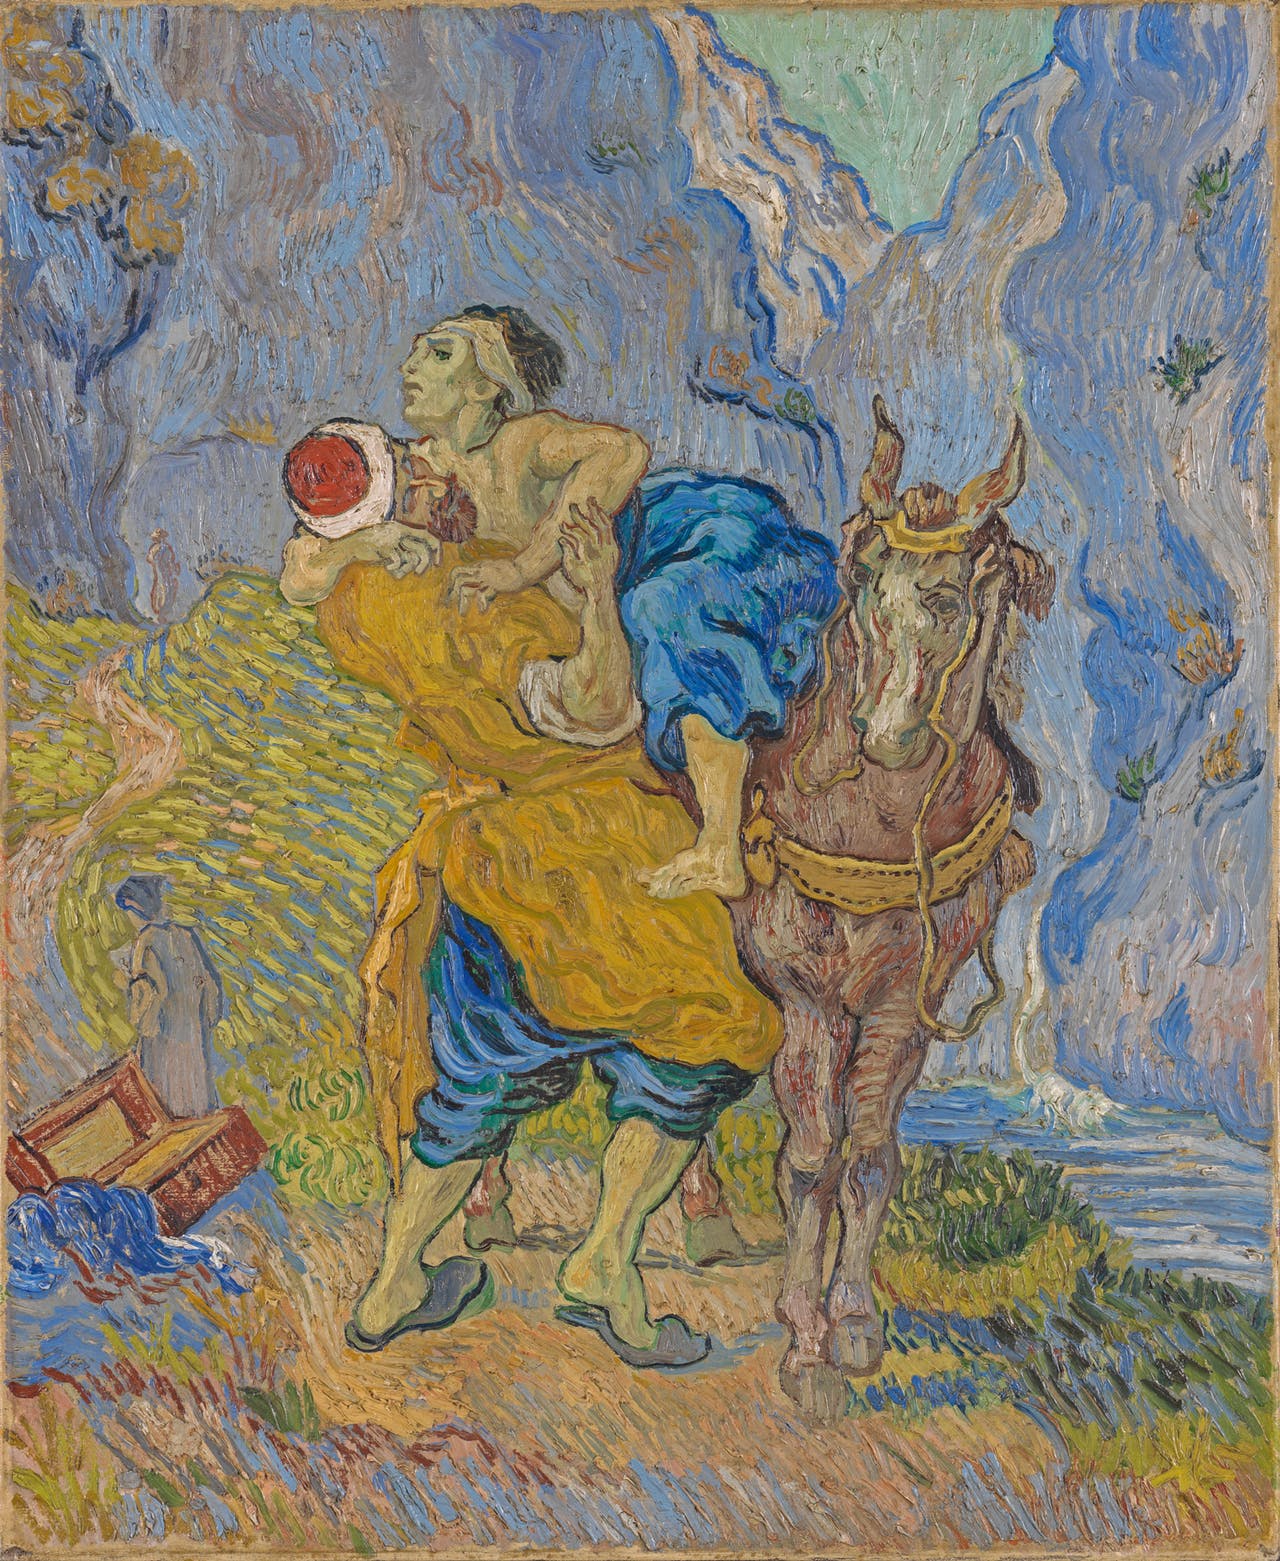 Le bon Samaritain by Vincent van Gogh - Early May 1890 - 73 × 59.5 cm Kröller-Müller Museum